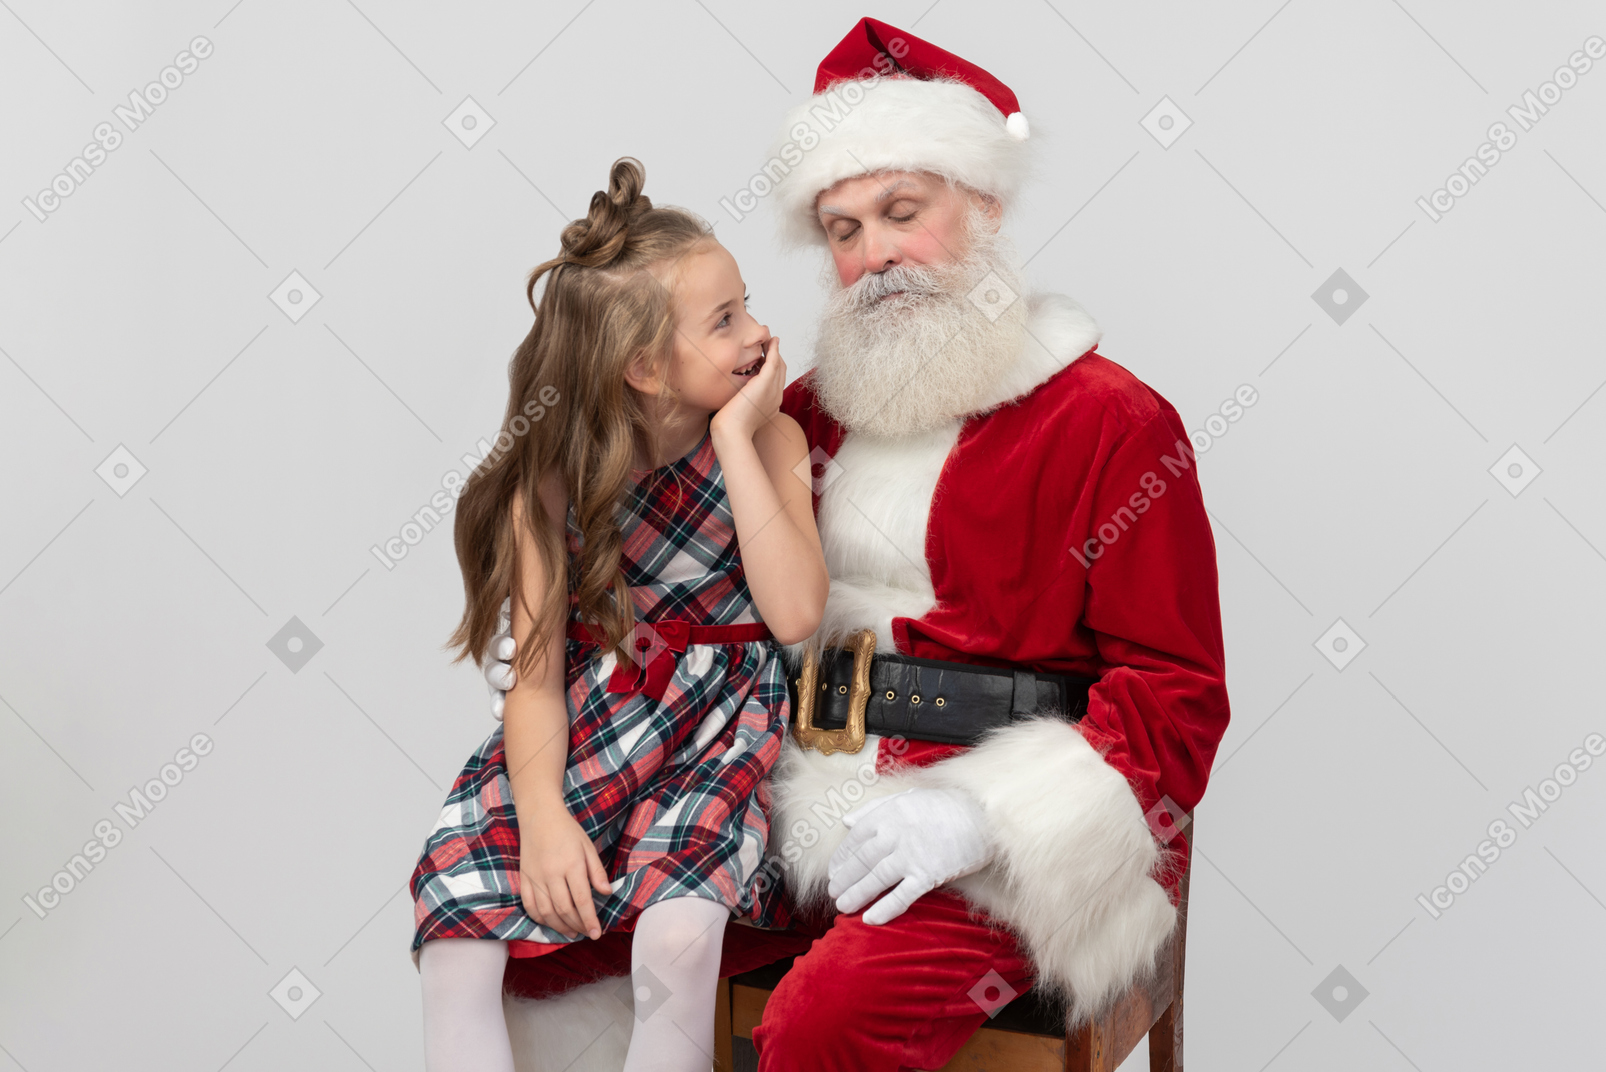 Little girl sitting on santa's knees and he's fallen asleep